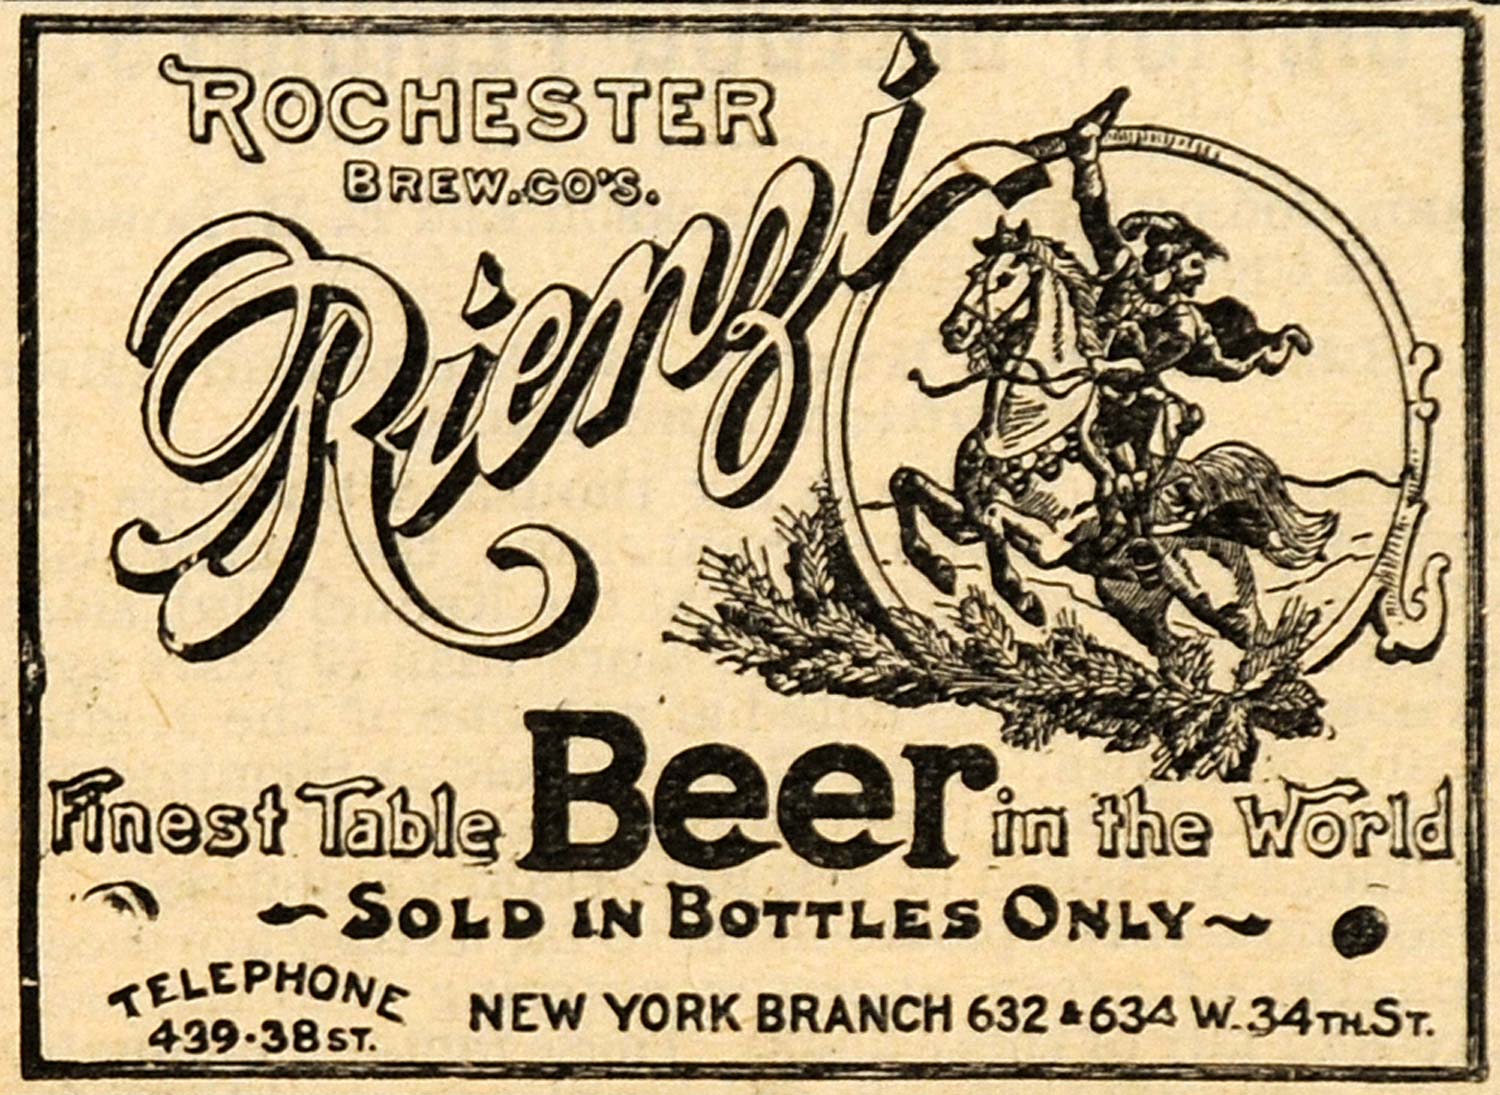 1895 Ad Rochester Brewing Company Rienzi Table Beer - ORIGINAL ADVERTISING FS1